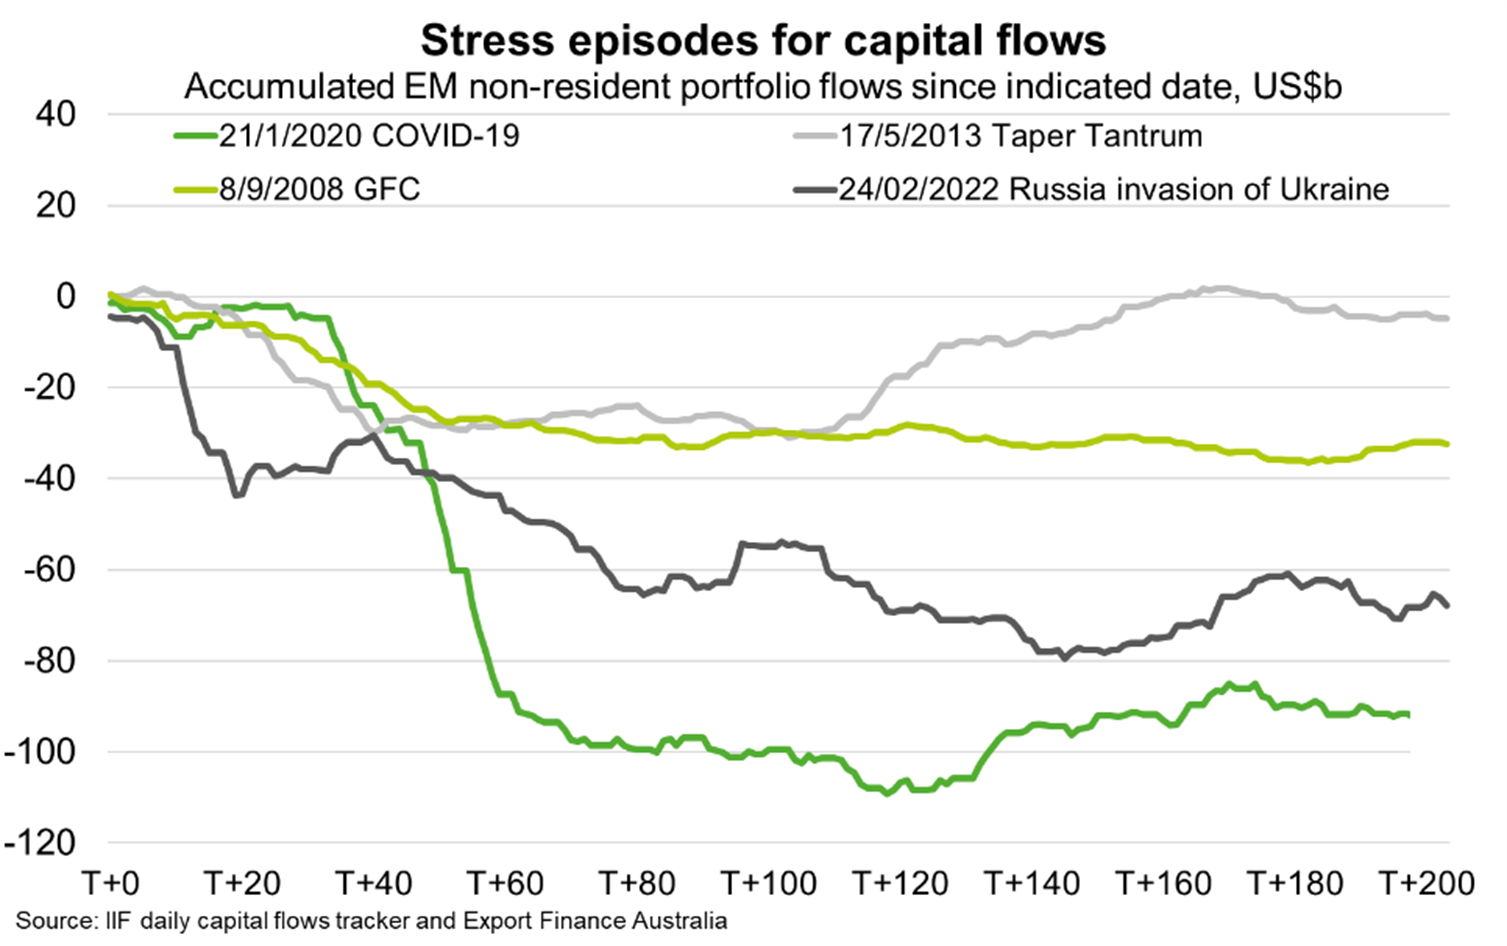 Stress episodes for capital flows, accumulated EM non-resident portfolio flows US$b